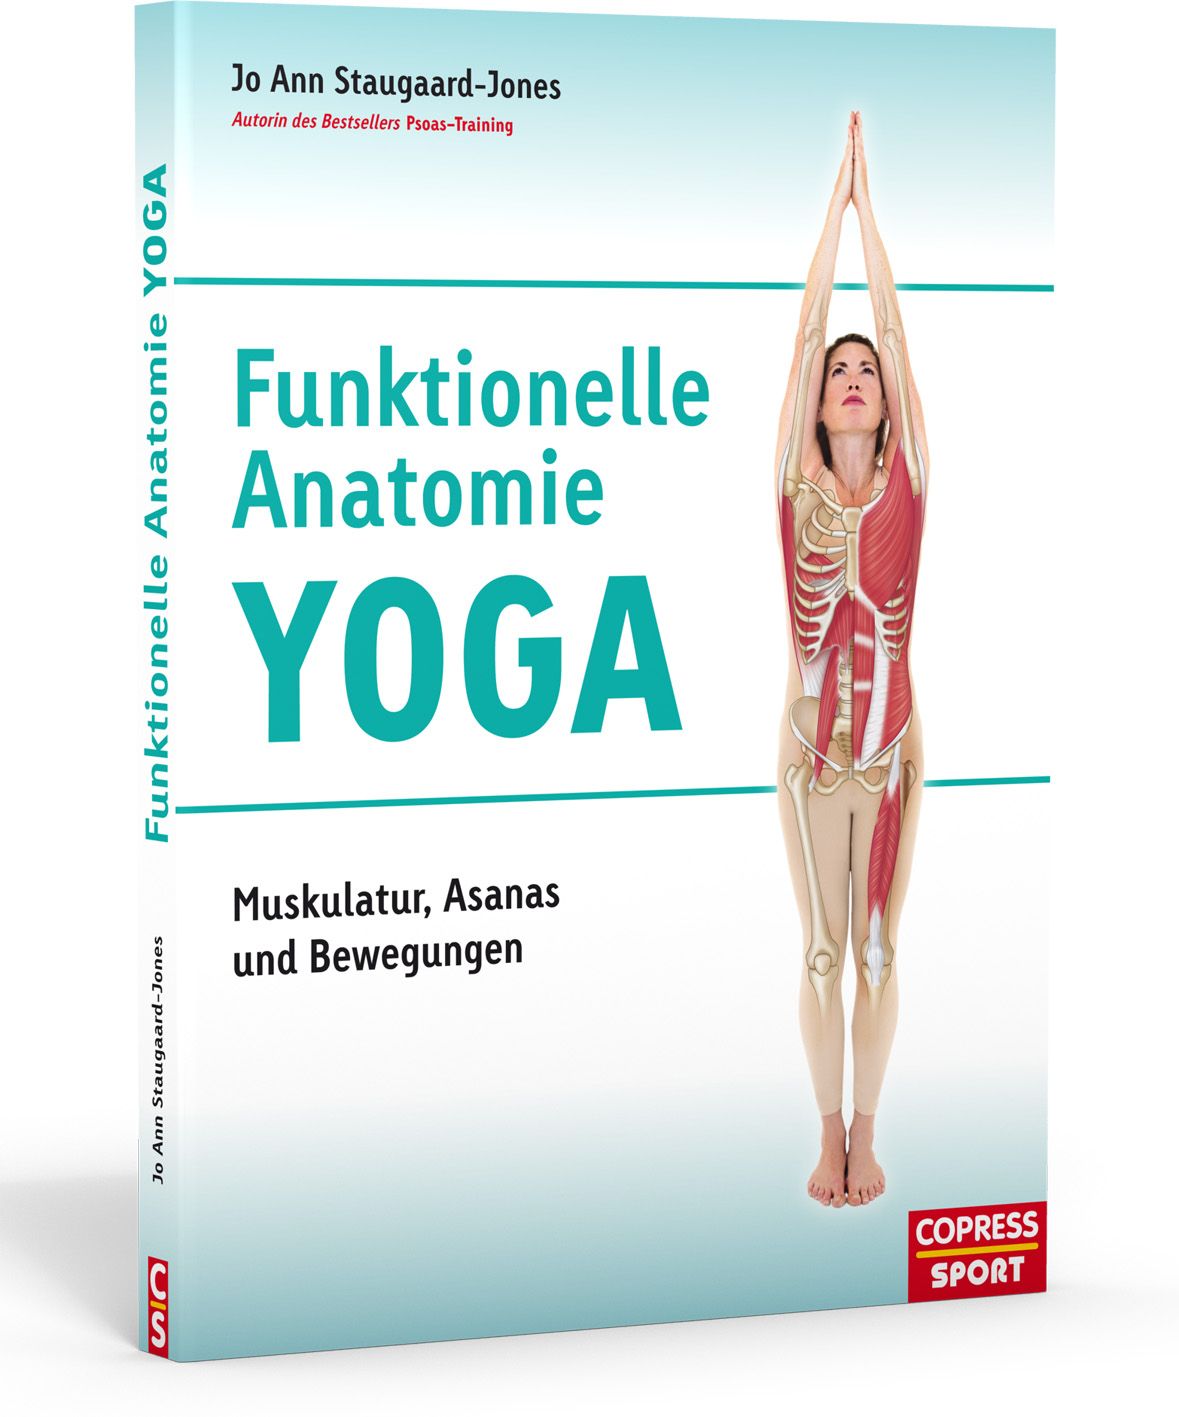 Funktionelle Anatomie Yoga